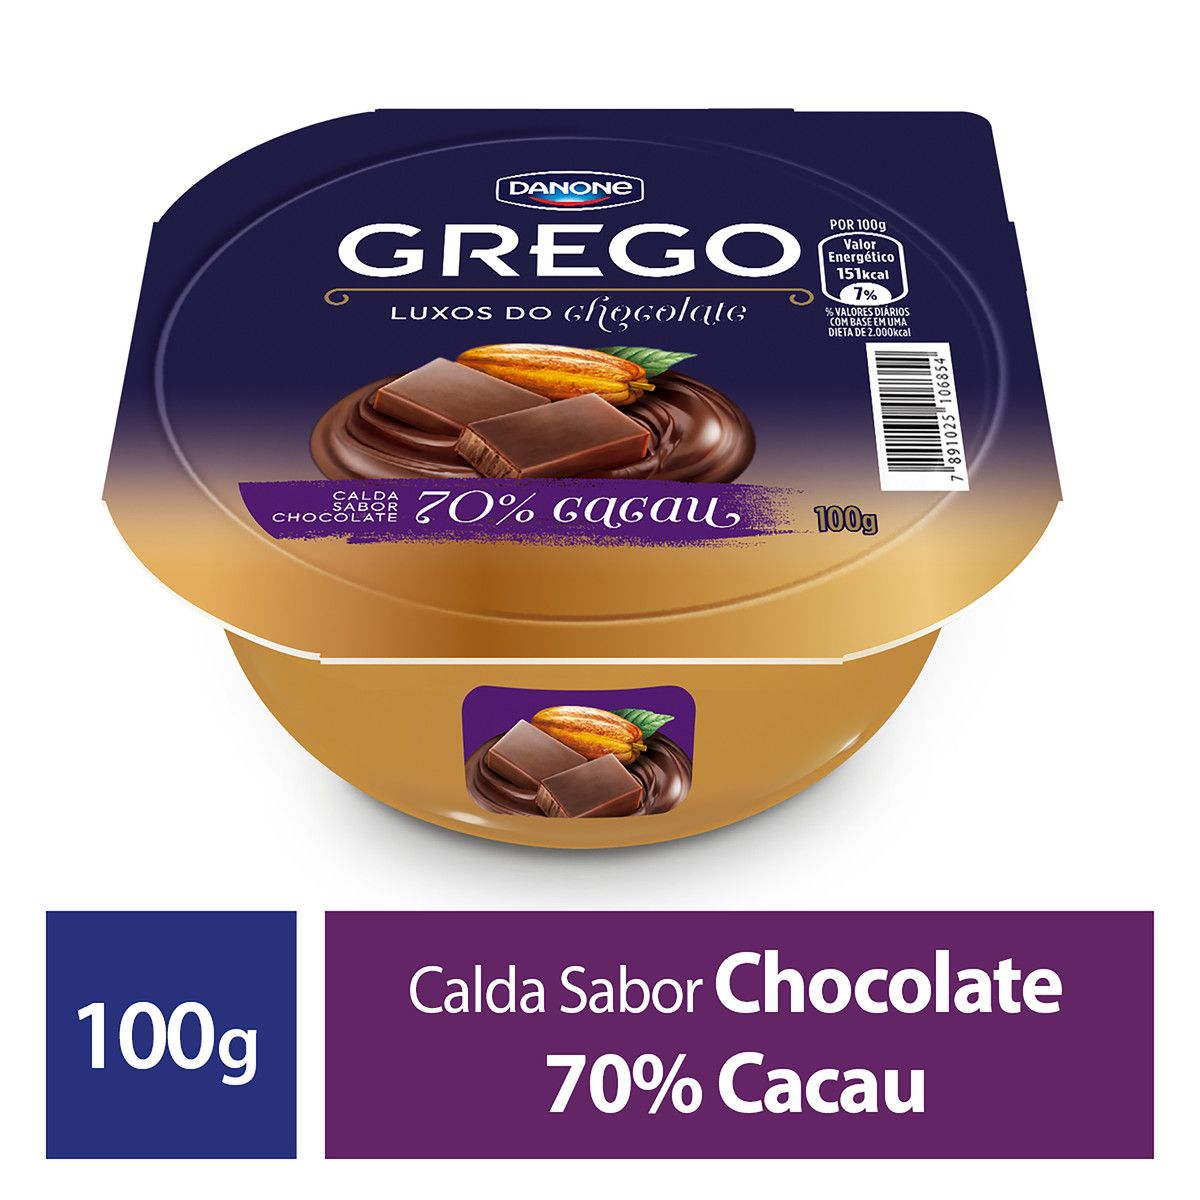 Iogurte Grego Calda Chocolate 70% Cacau Danone Luxos do Chocolate Pote 100g image number 1